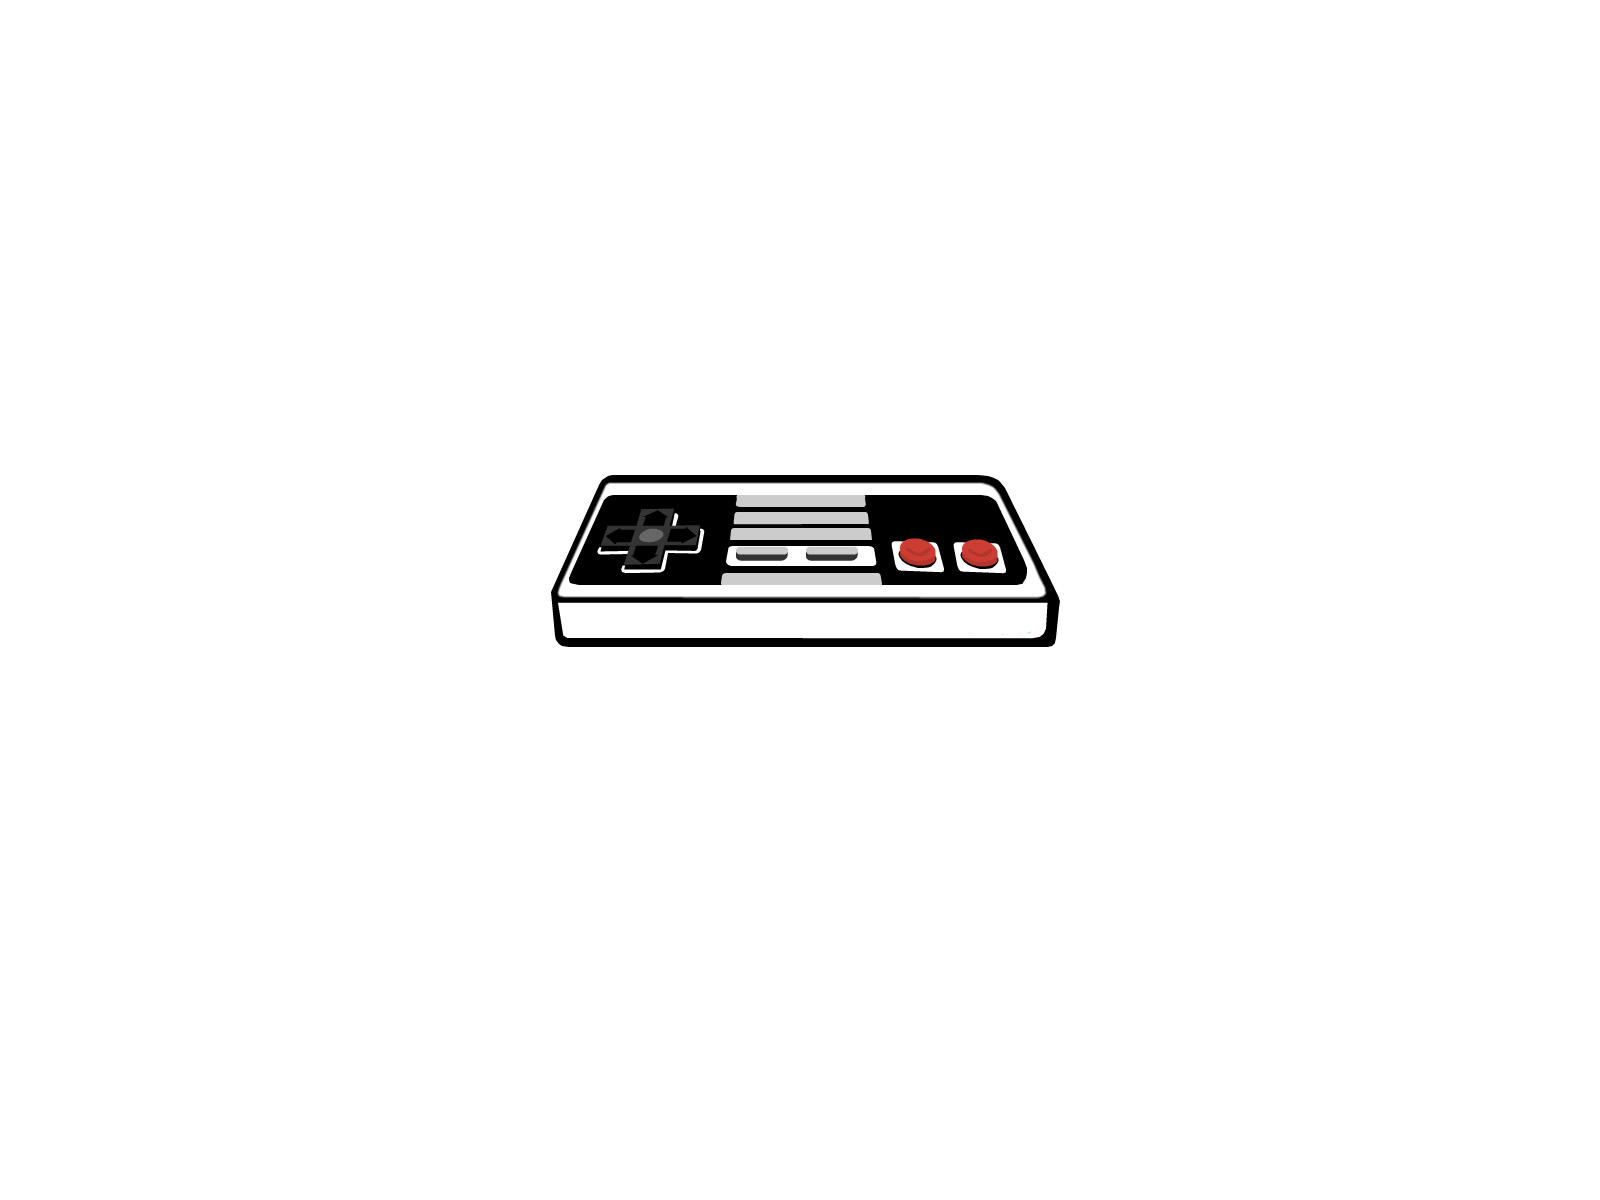 NES Controller 1600x1200